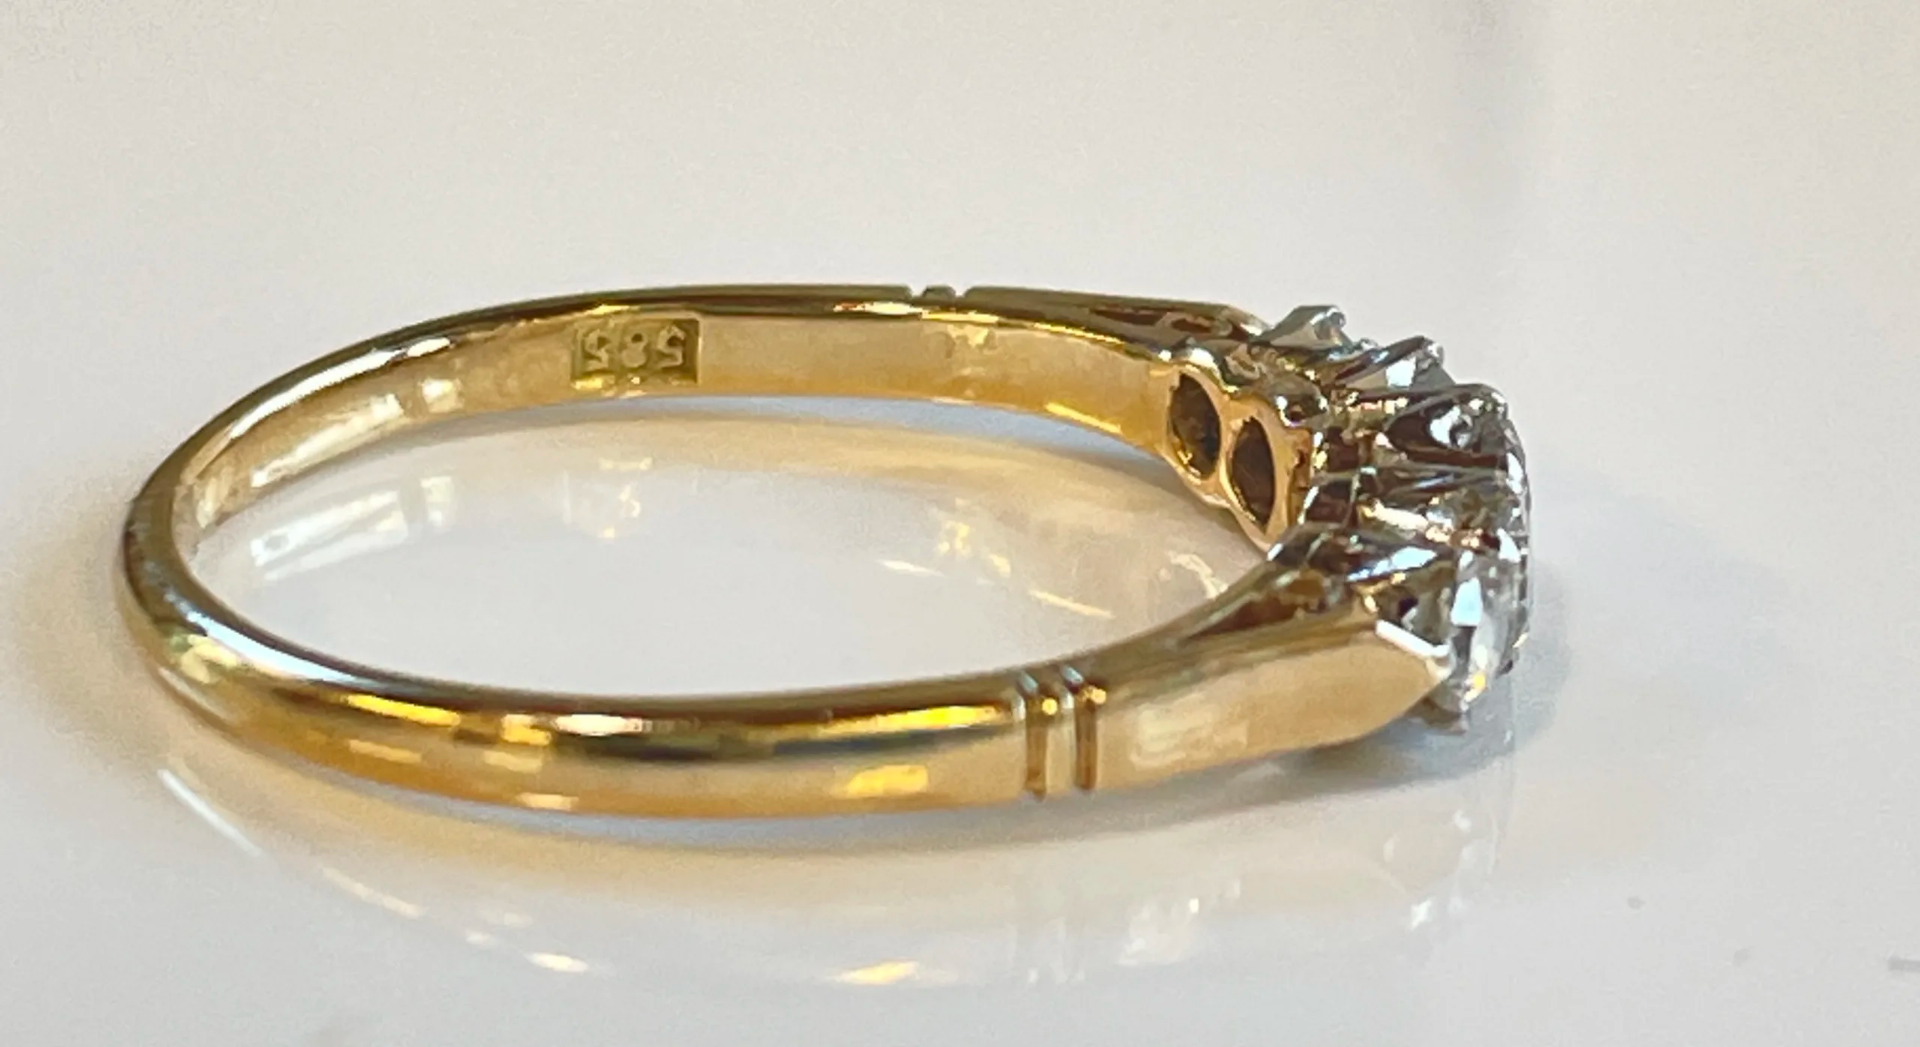 Antique Diamond Ring 14K Yellow Gold approx. 0.24ct Diamonds - Image 2 of 3